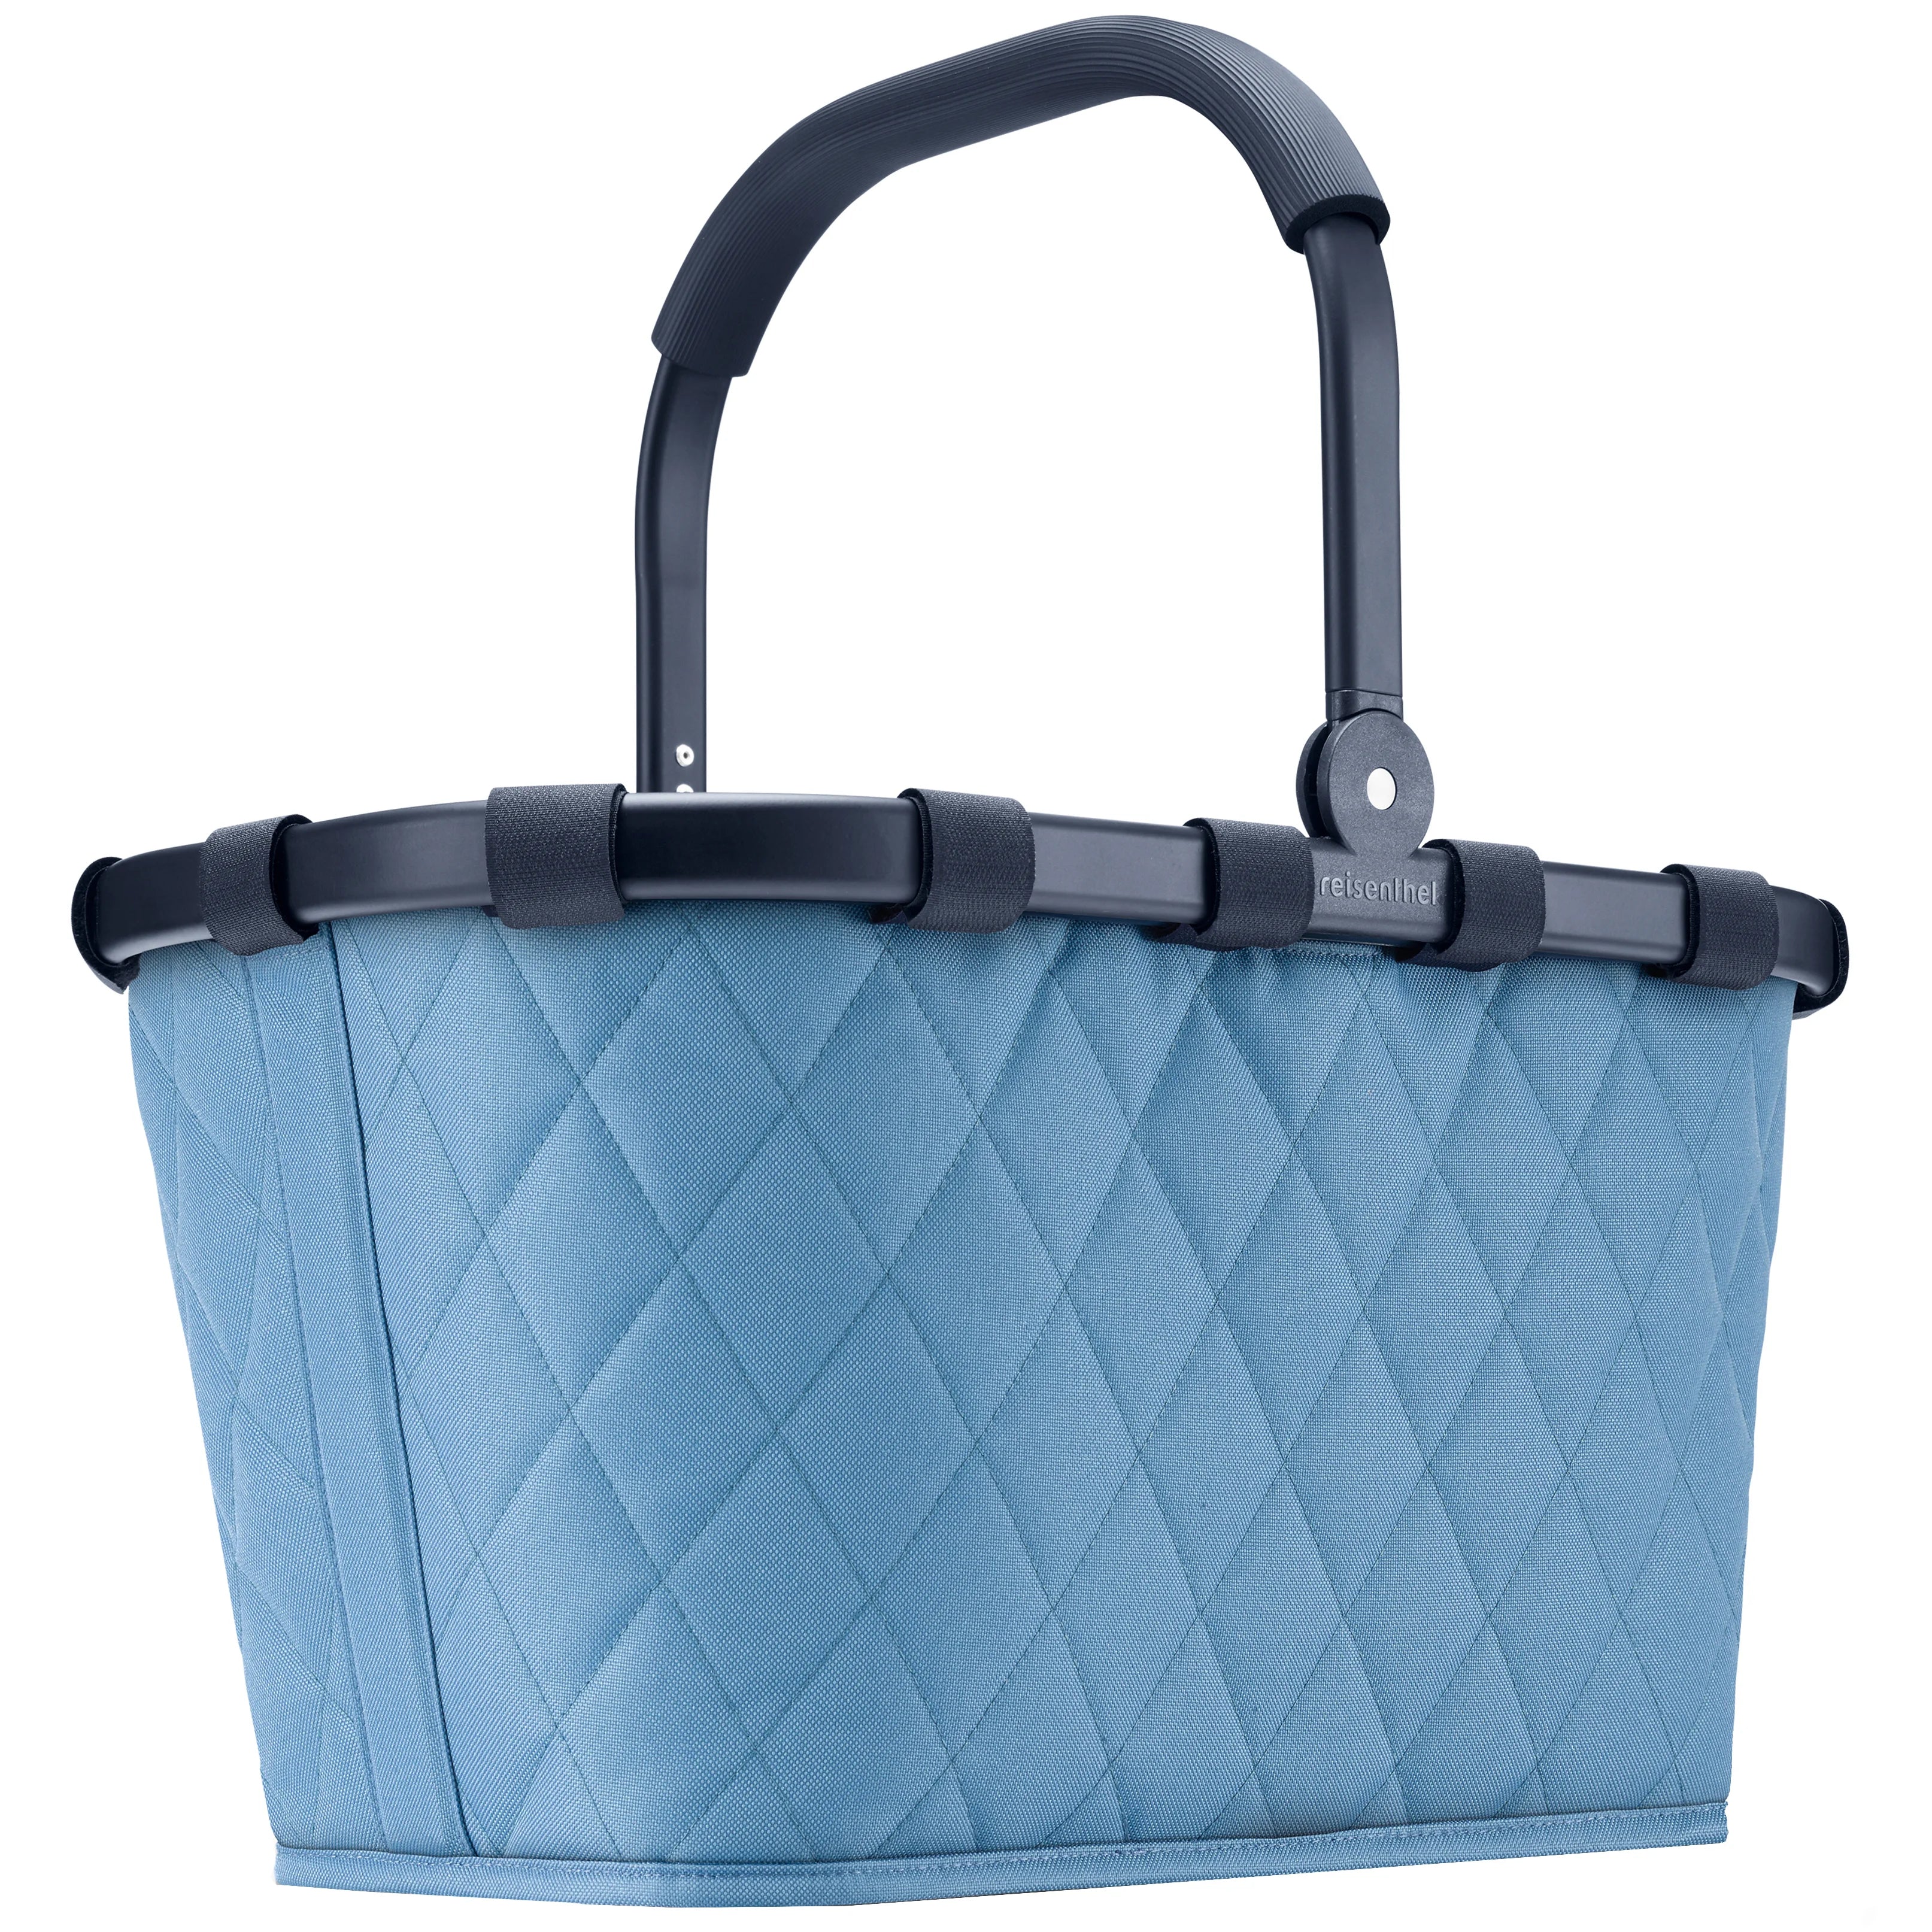 Reisenthel Rhombus Carrybag Einkaufskorb 48 cm - Rhombus Blue